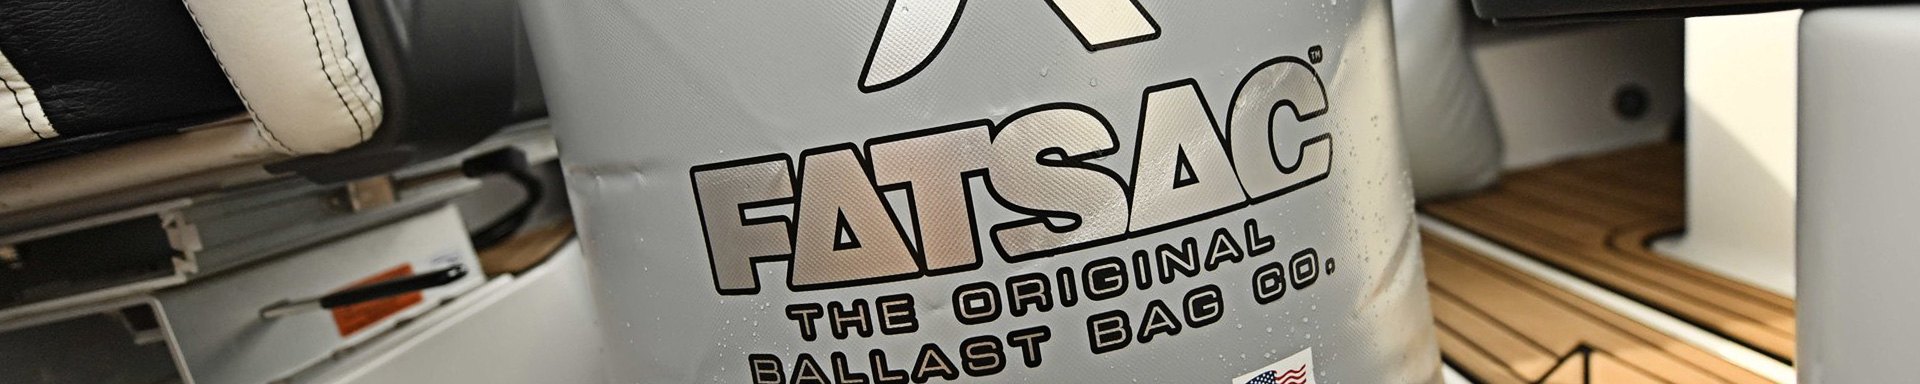 FatSac Ballast Bags & Parts